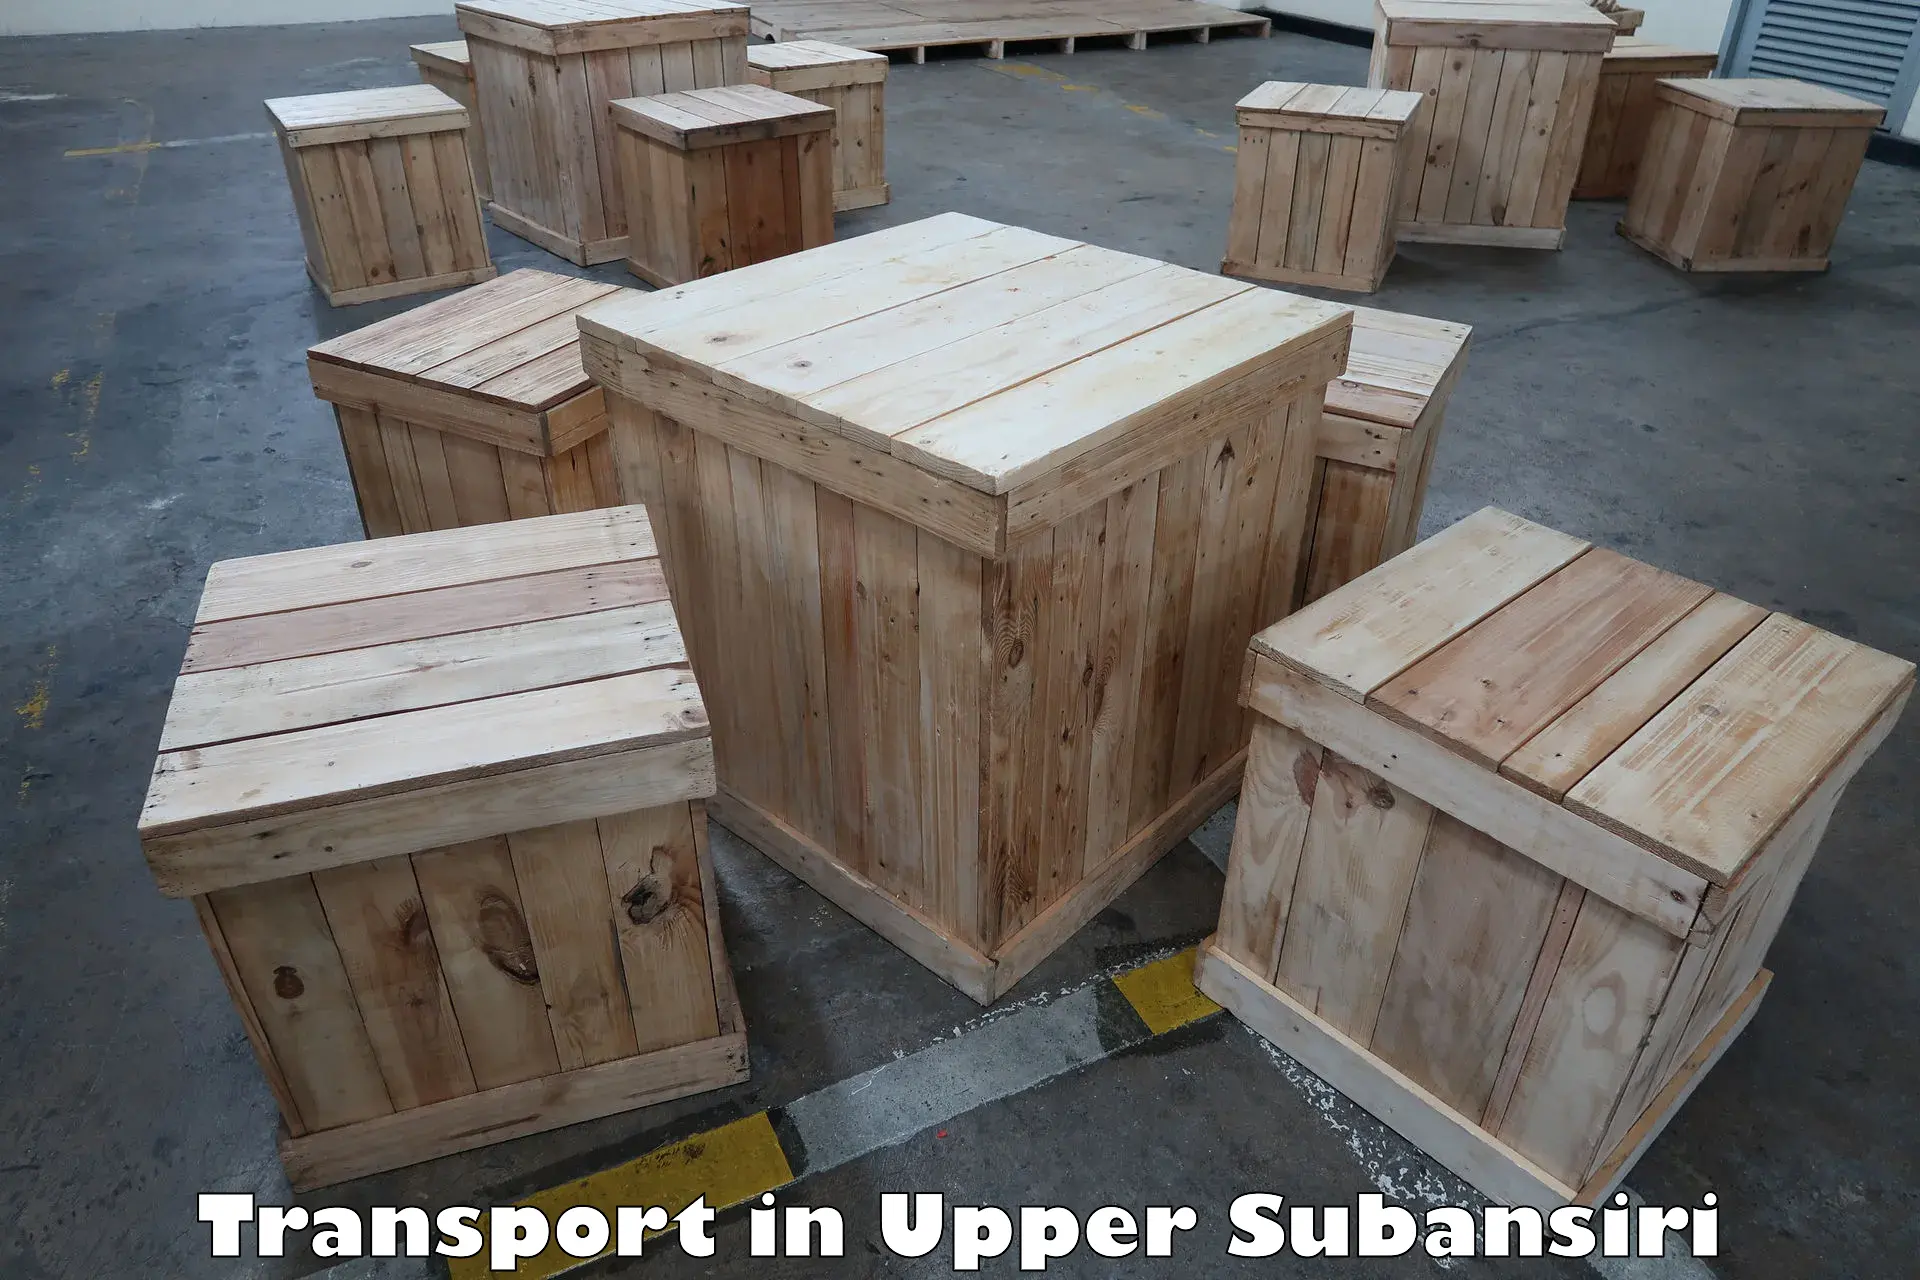 Daily parcel service transport in Upper Subansiri